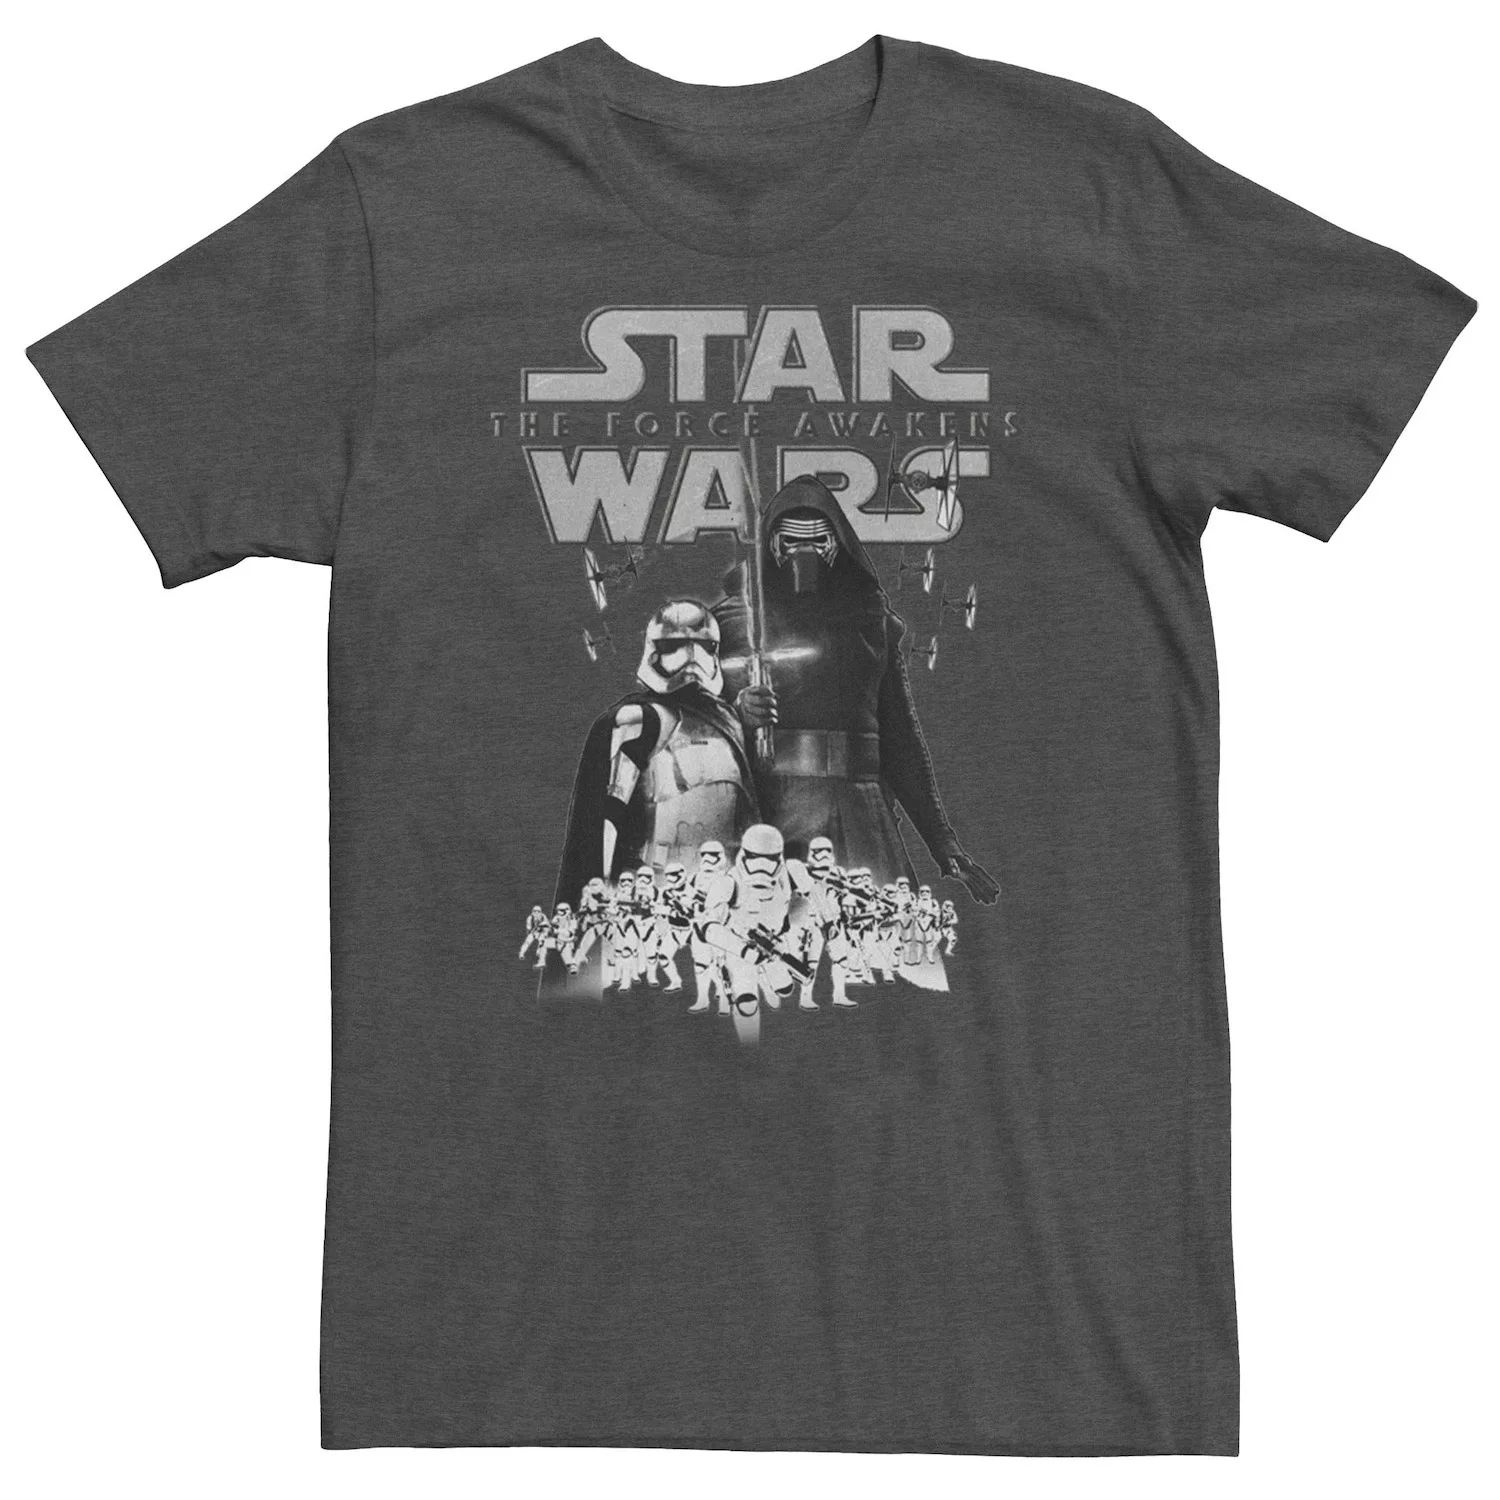 Мужская футболка с рисунком с рисунком Star Wars